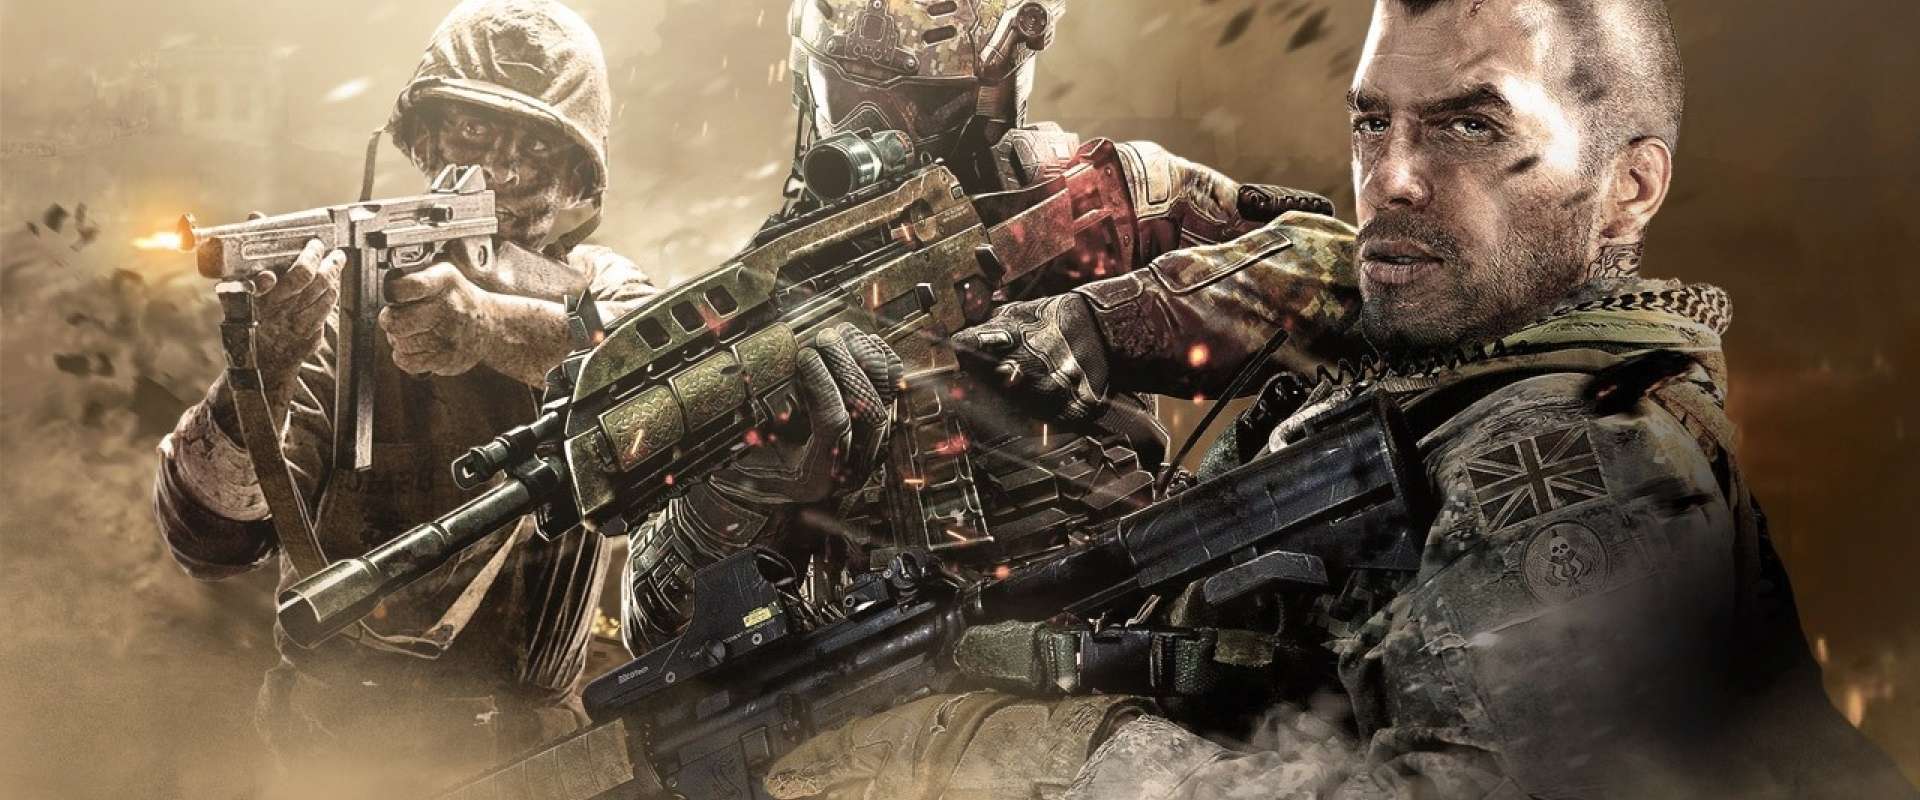 Call of Duty: Advanced Warfare - Tribo Gamer